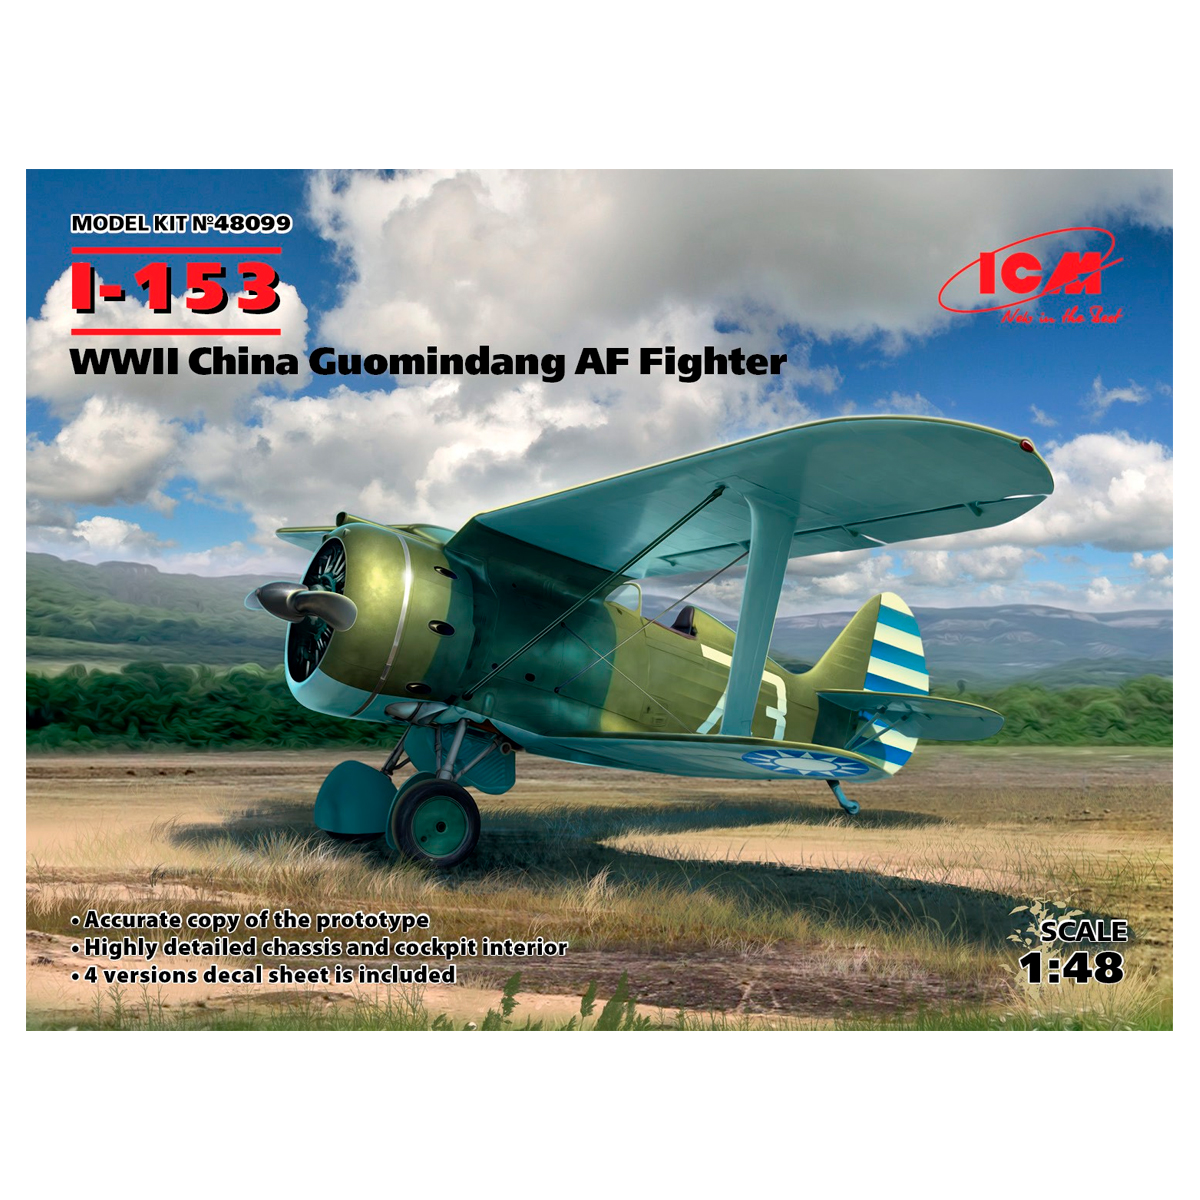 I-153, WWII China Guomindang AF Fighter 1/48